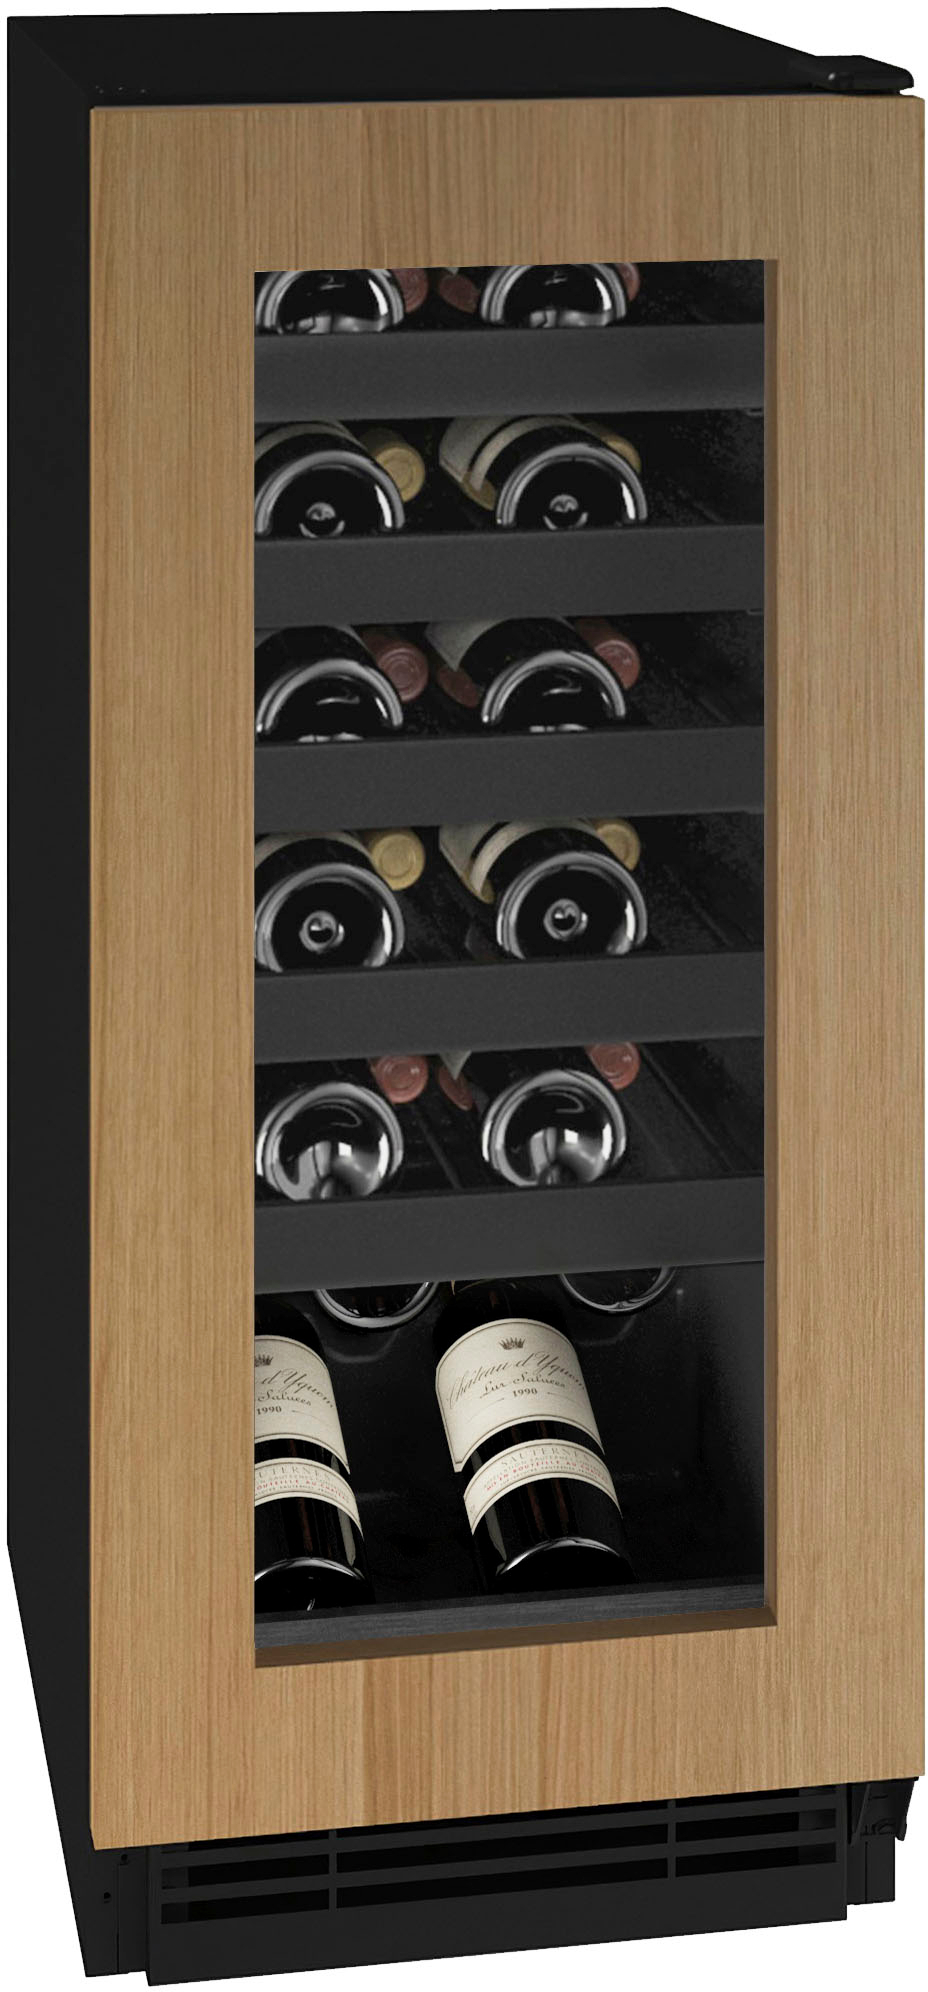 Angle View: U-Line - 24-750ml bottle Wine Refrigerator in Integrated Door Frame - Custom Panel Ready